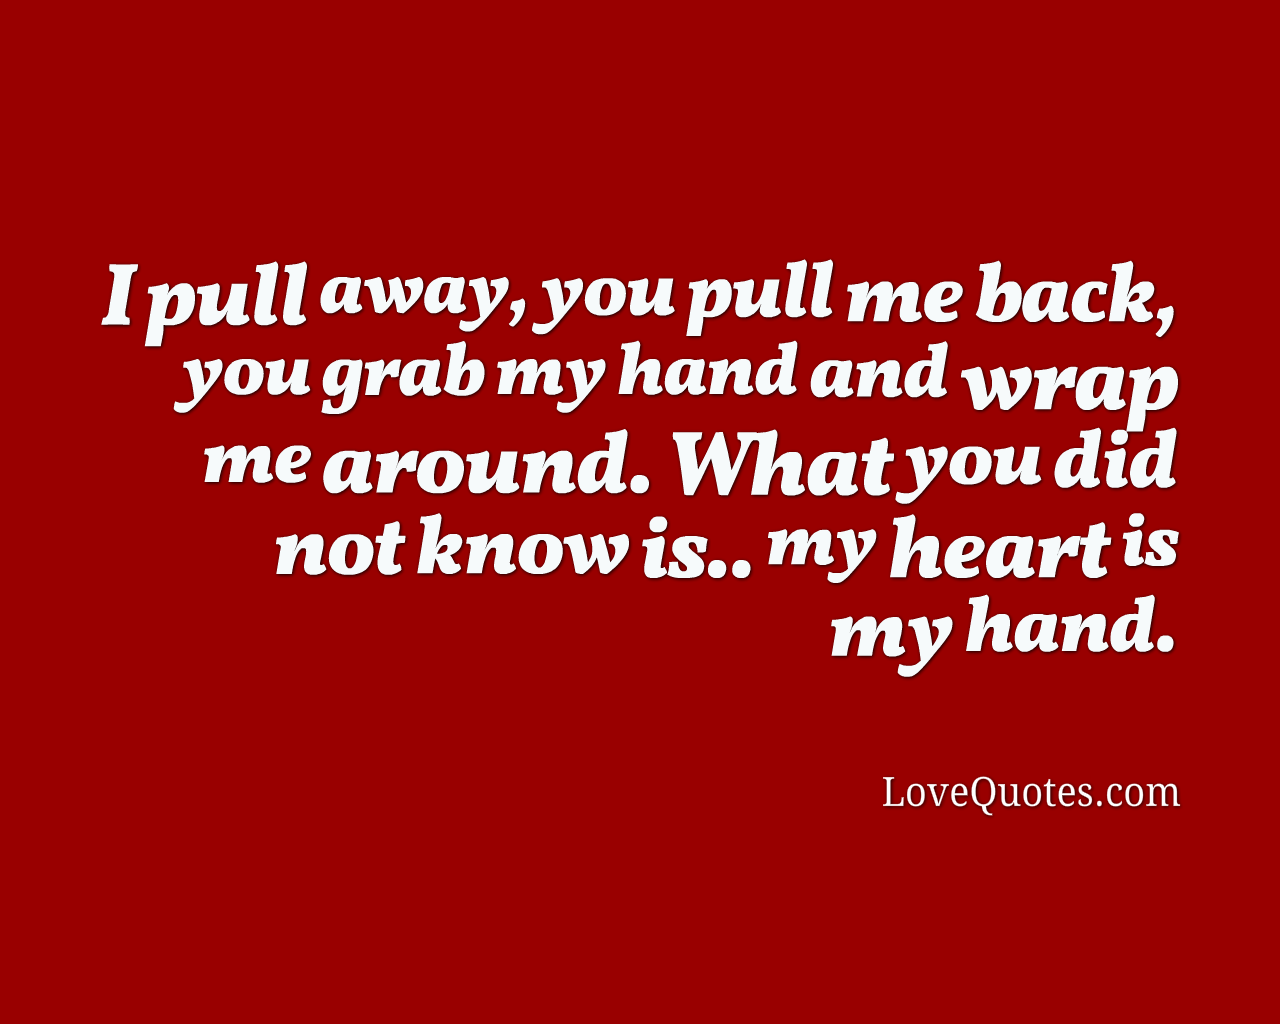 My Heart Is My Hand